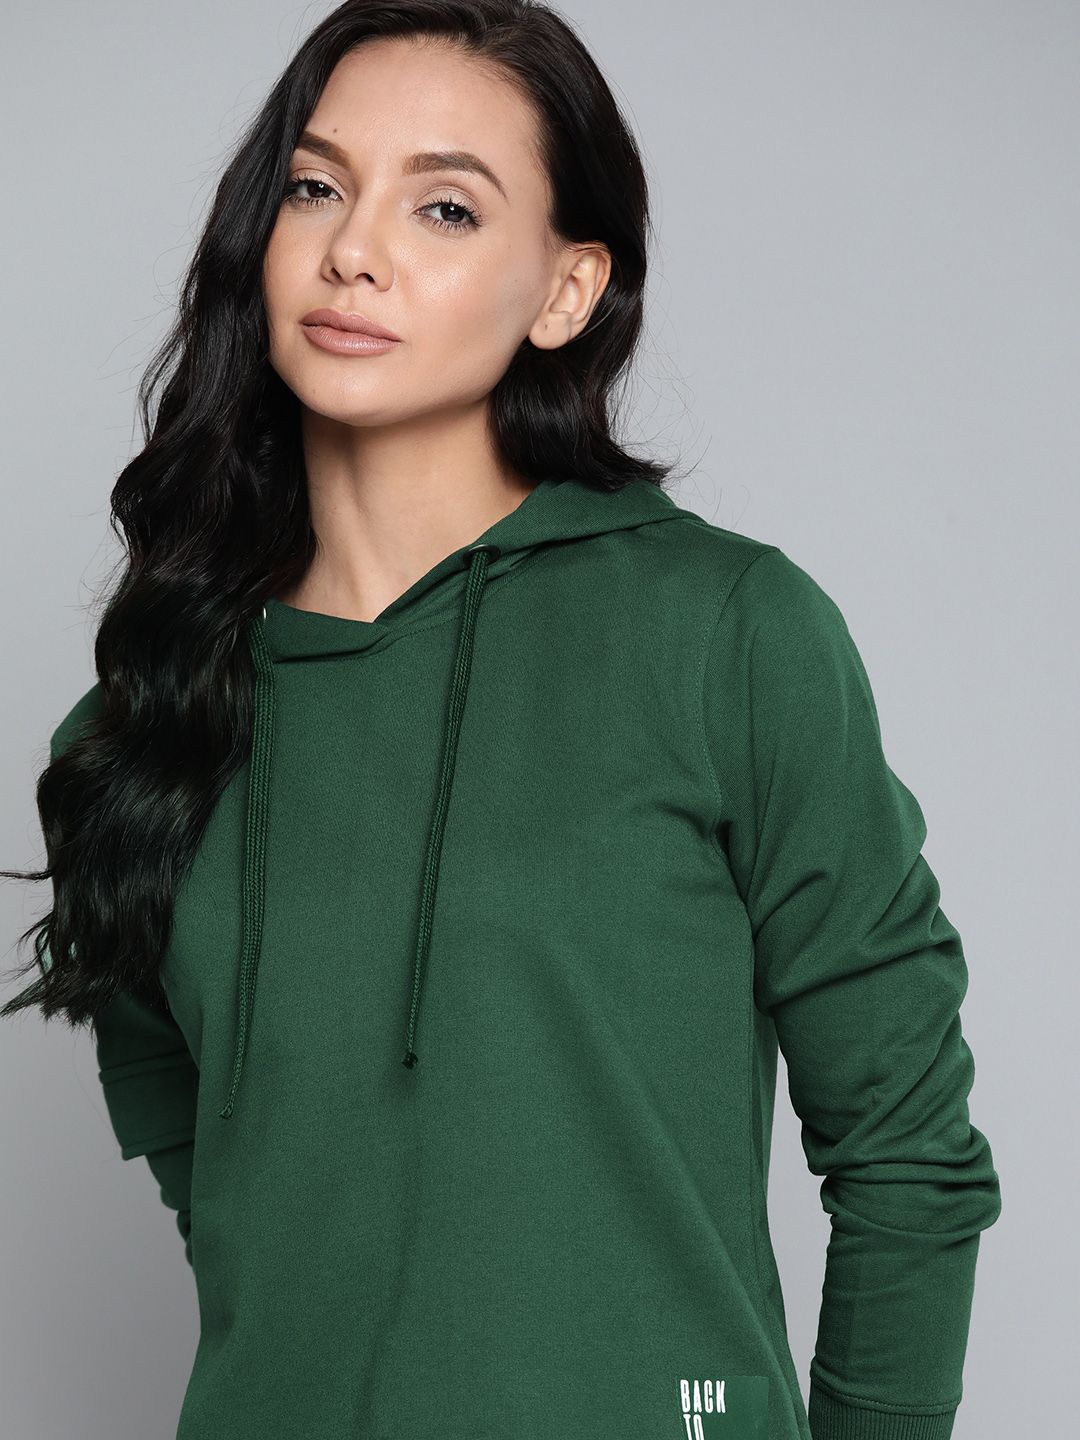 Harvard Women Green Hooded Sweatshirt Price in India